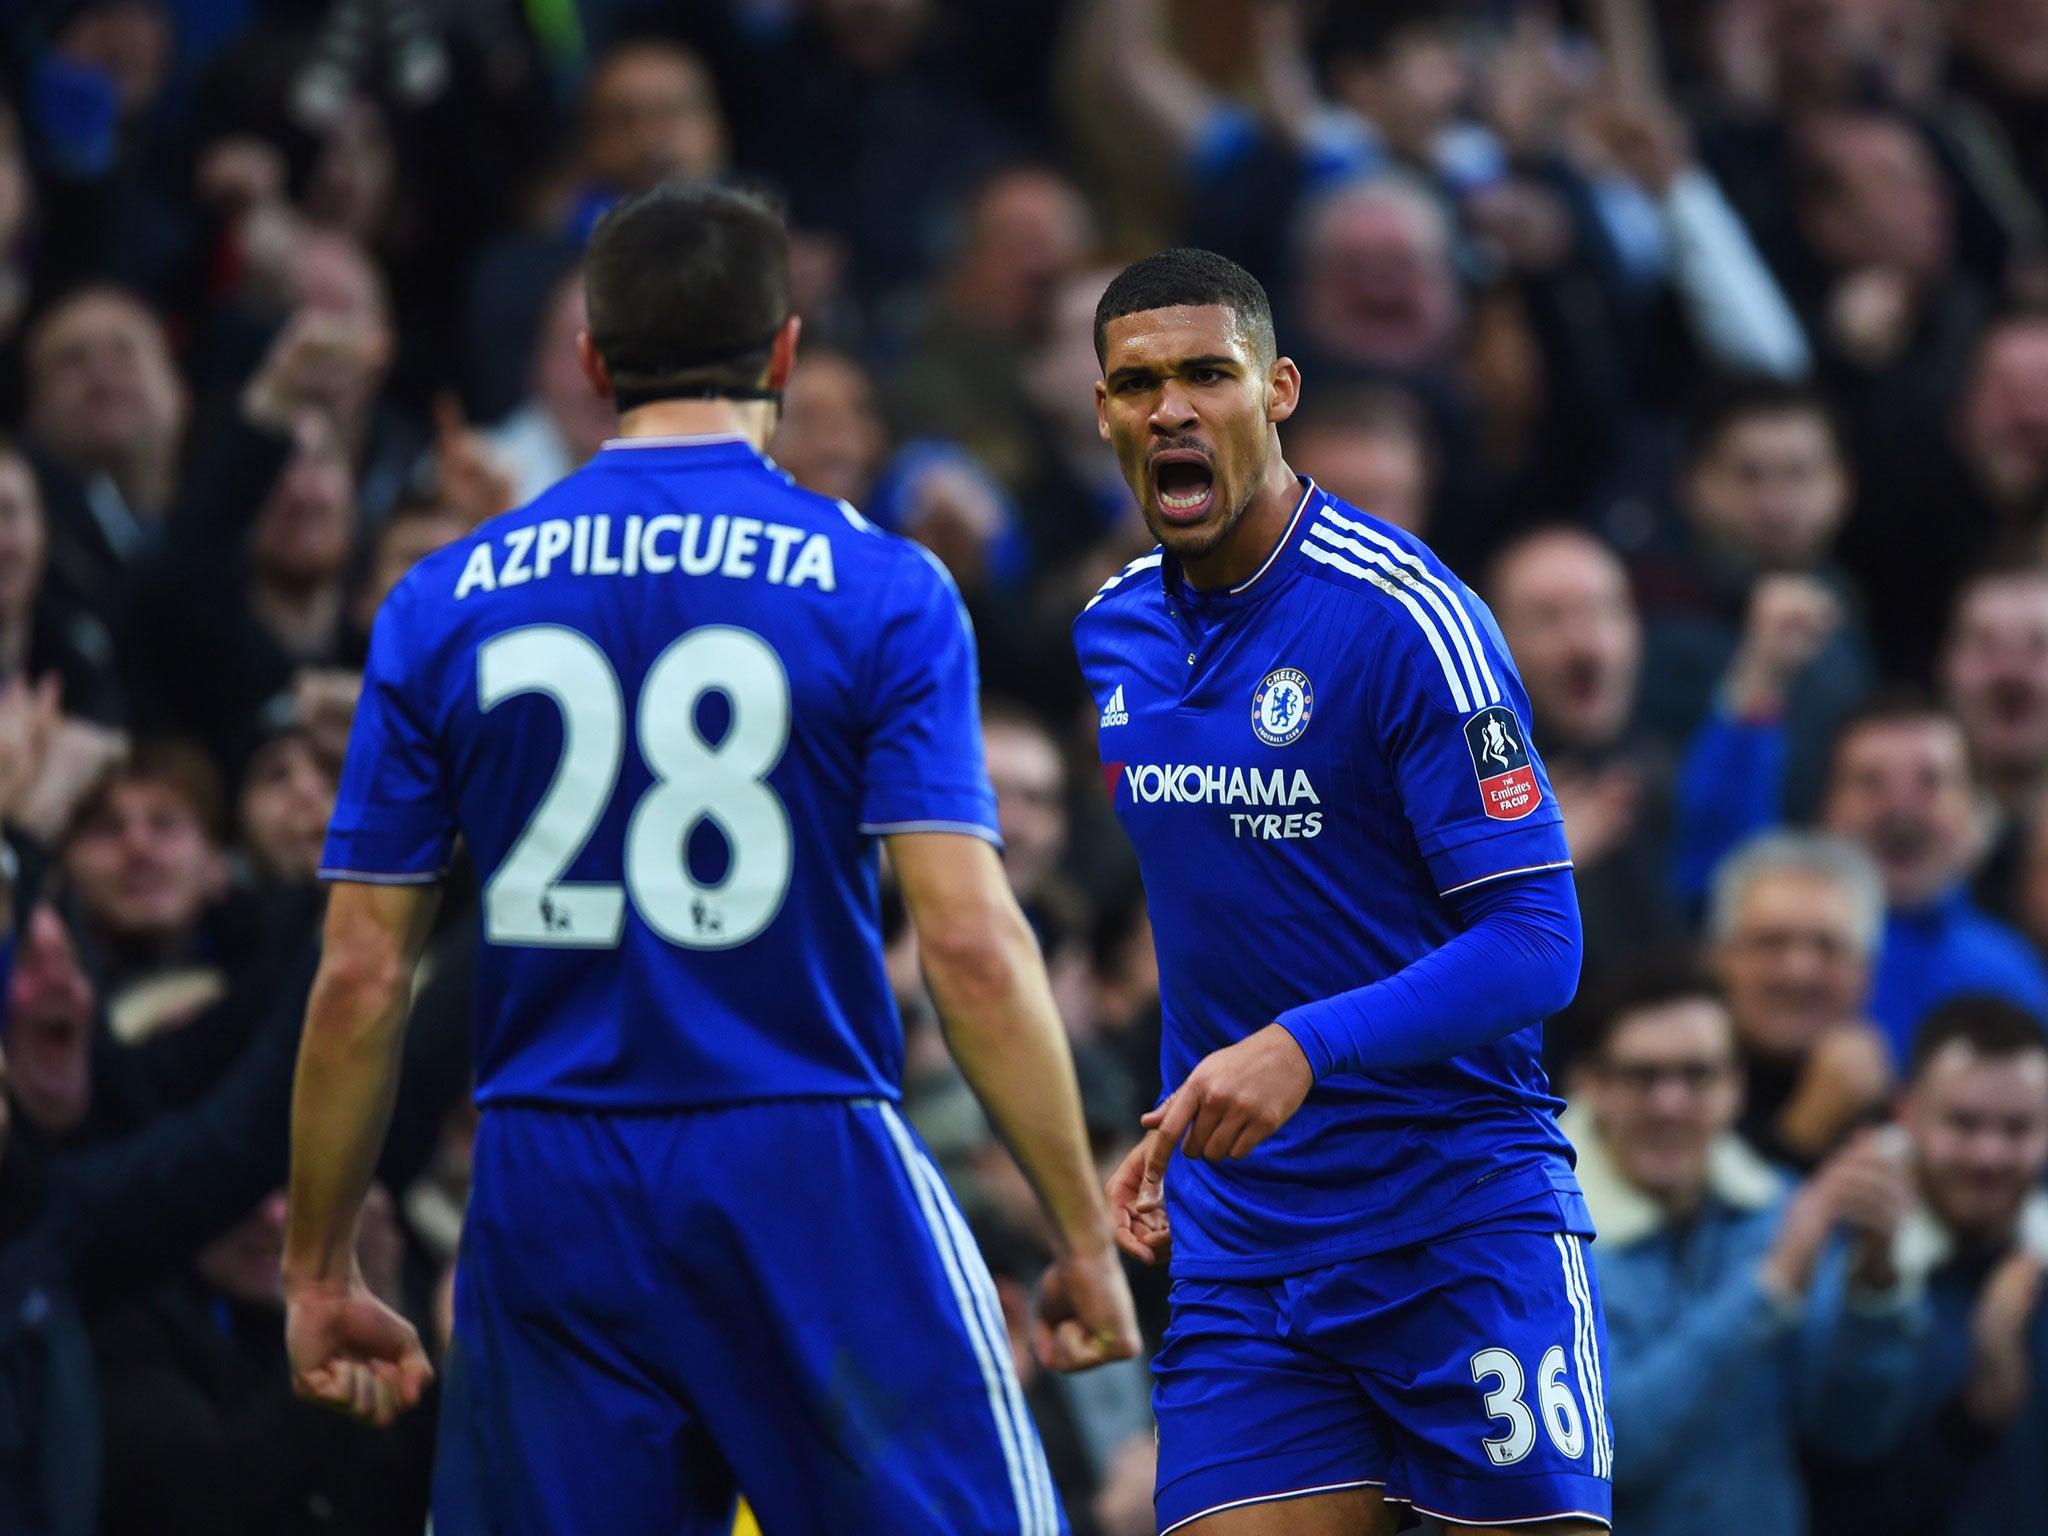 Ruben Loftus-Cheek celebrates scoring for Chelsea against Scunthorpe in the FA Cup